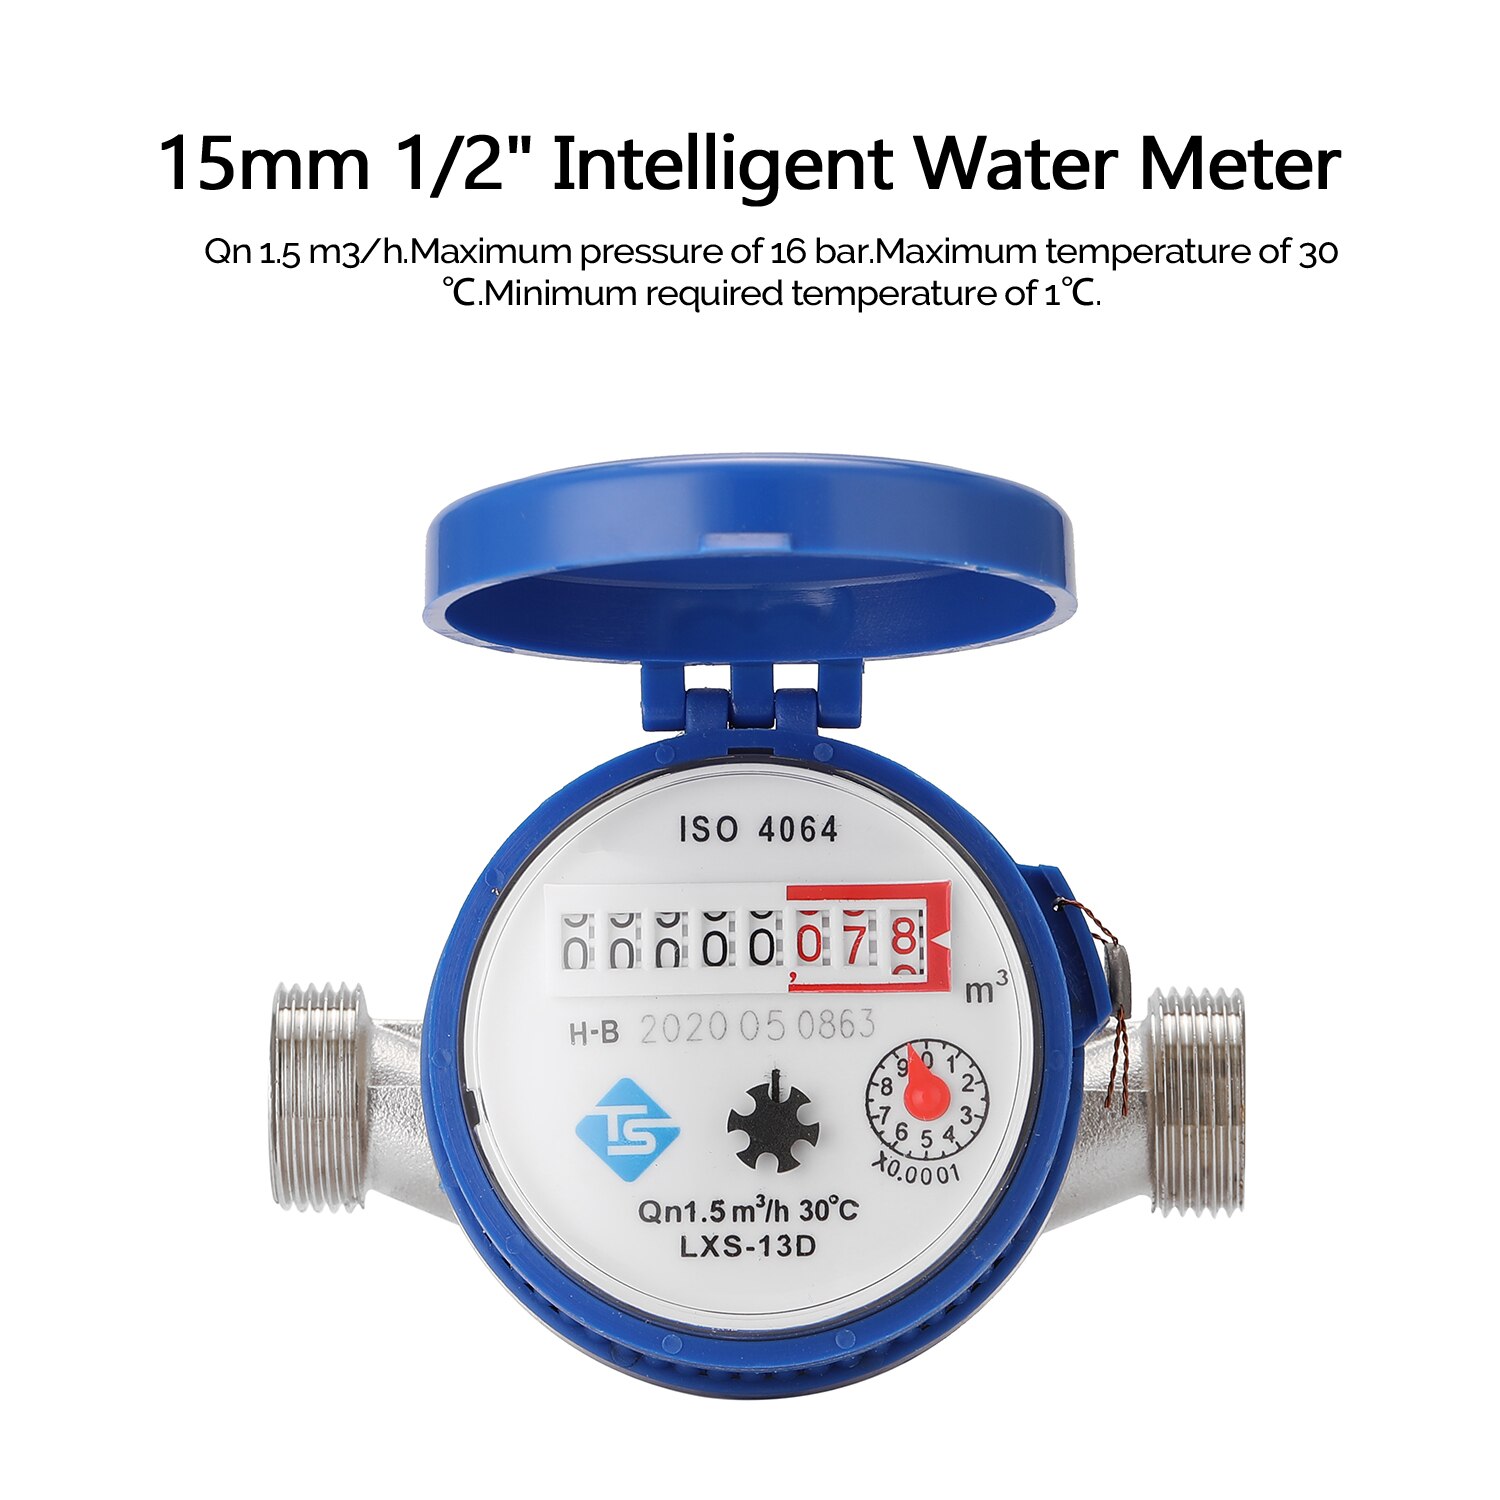 15mm intelligente vandmålere husstand mekanisk rotor type koldtvandsmåler pointer digital display kombination vandmålere